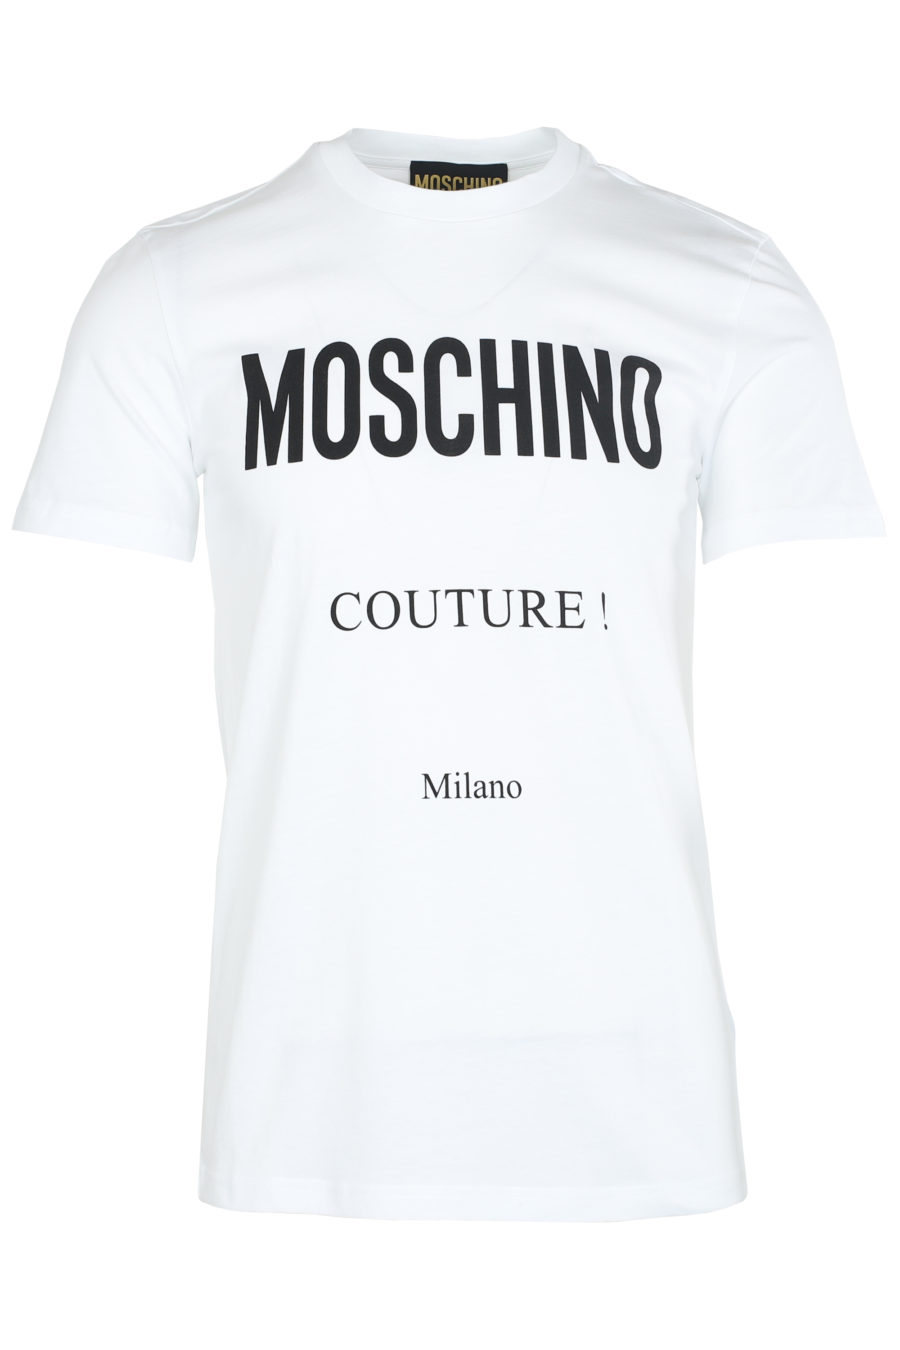 Camiseta blanca con logo "Couture" - IMG 6174